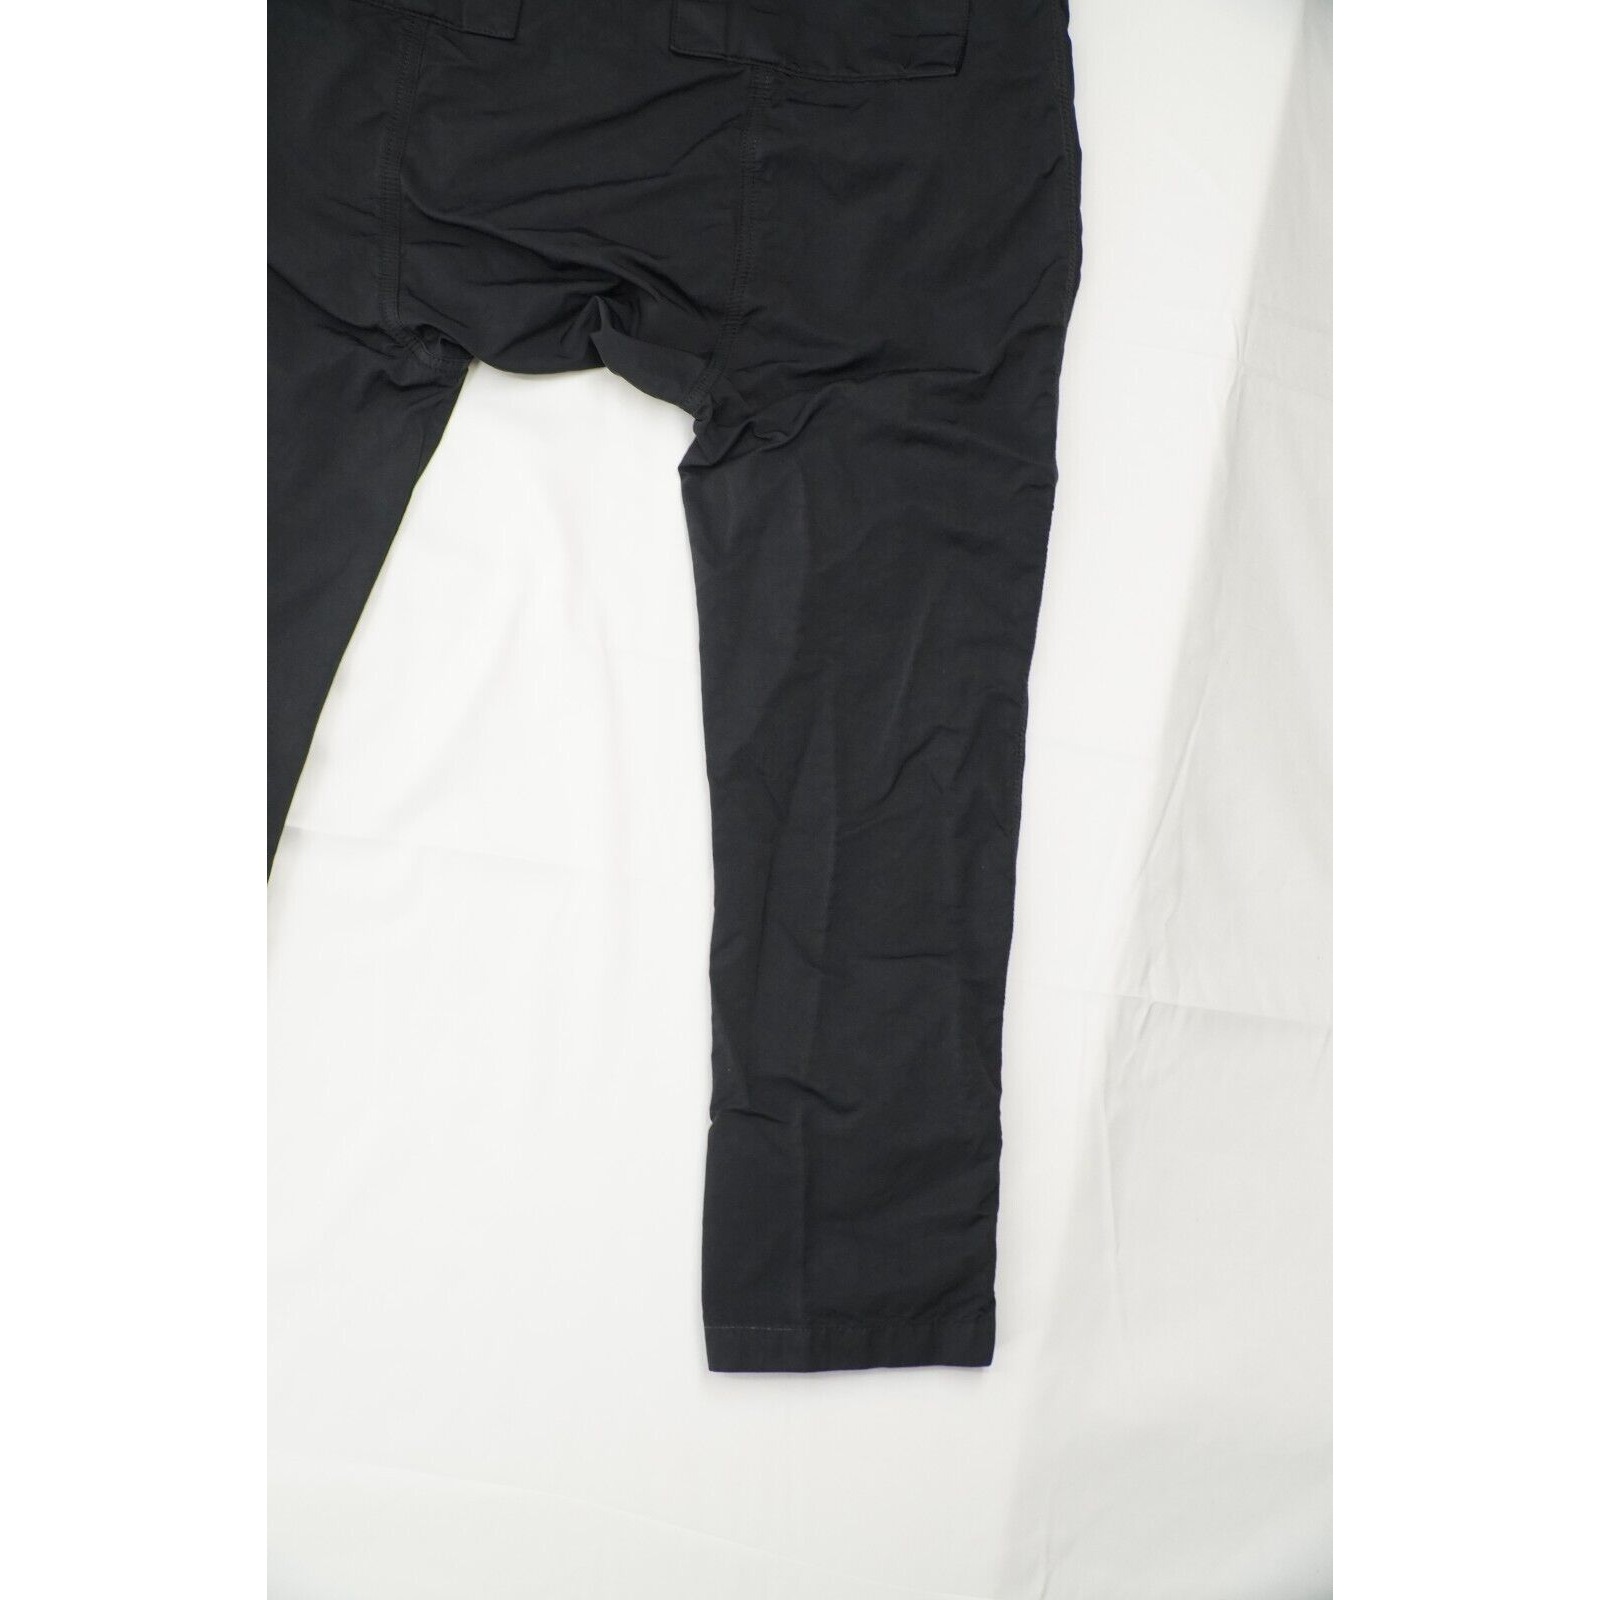 Black Lounge Pants Elastic Drawstring Drop Crotch Large - 10